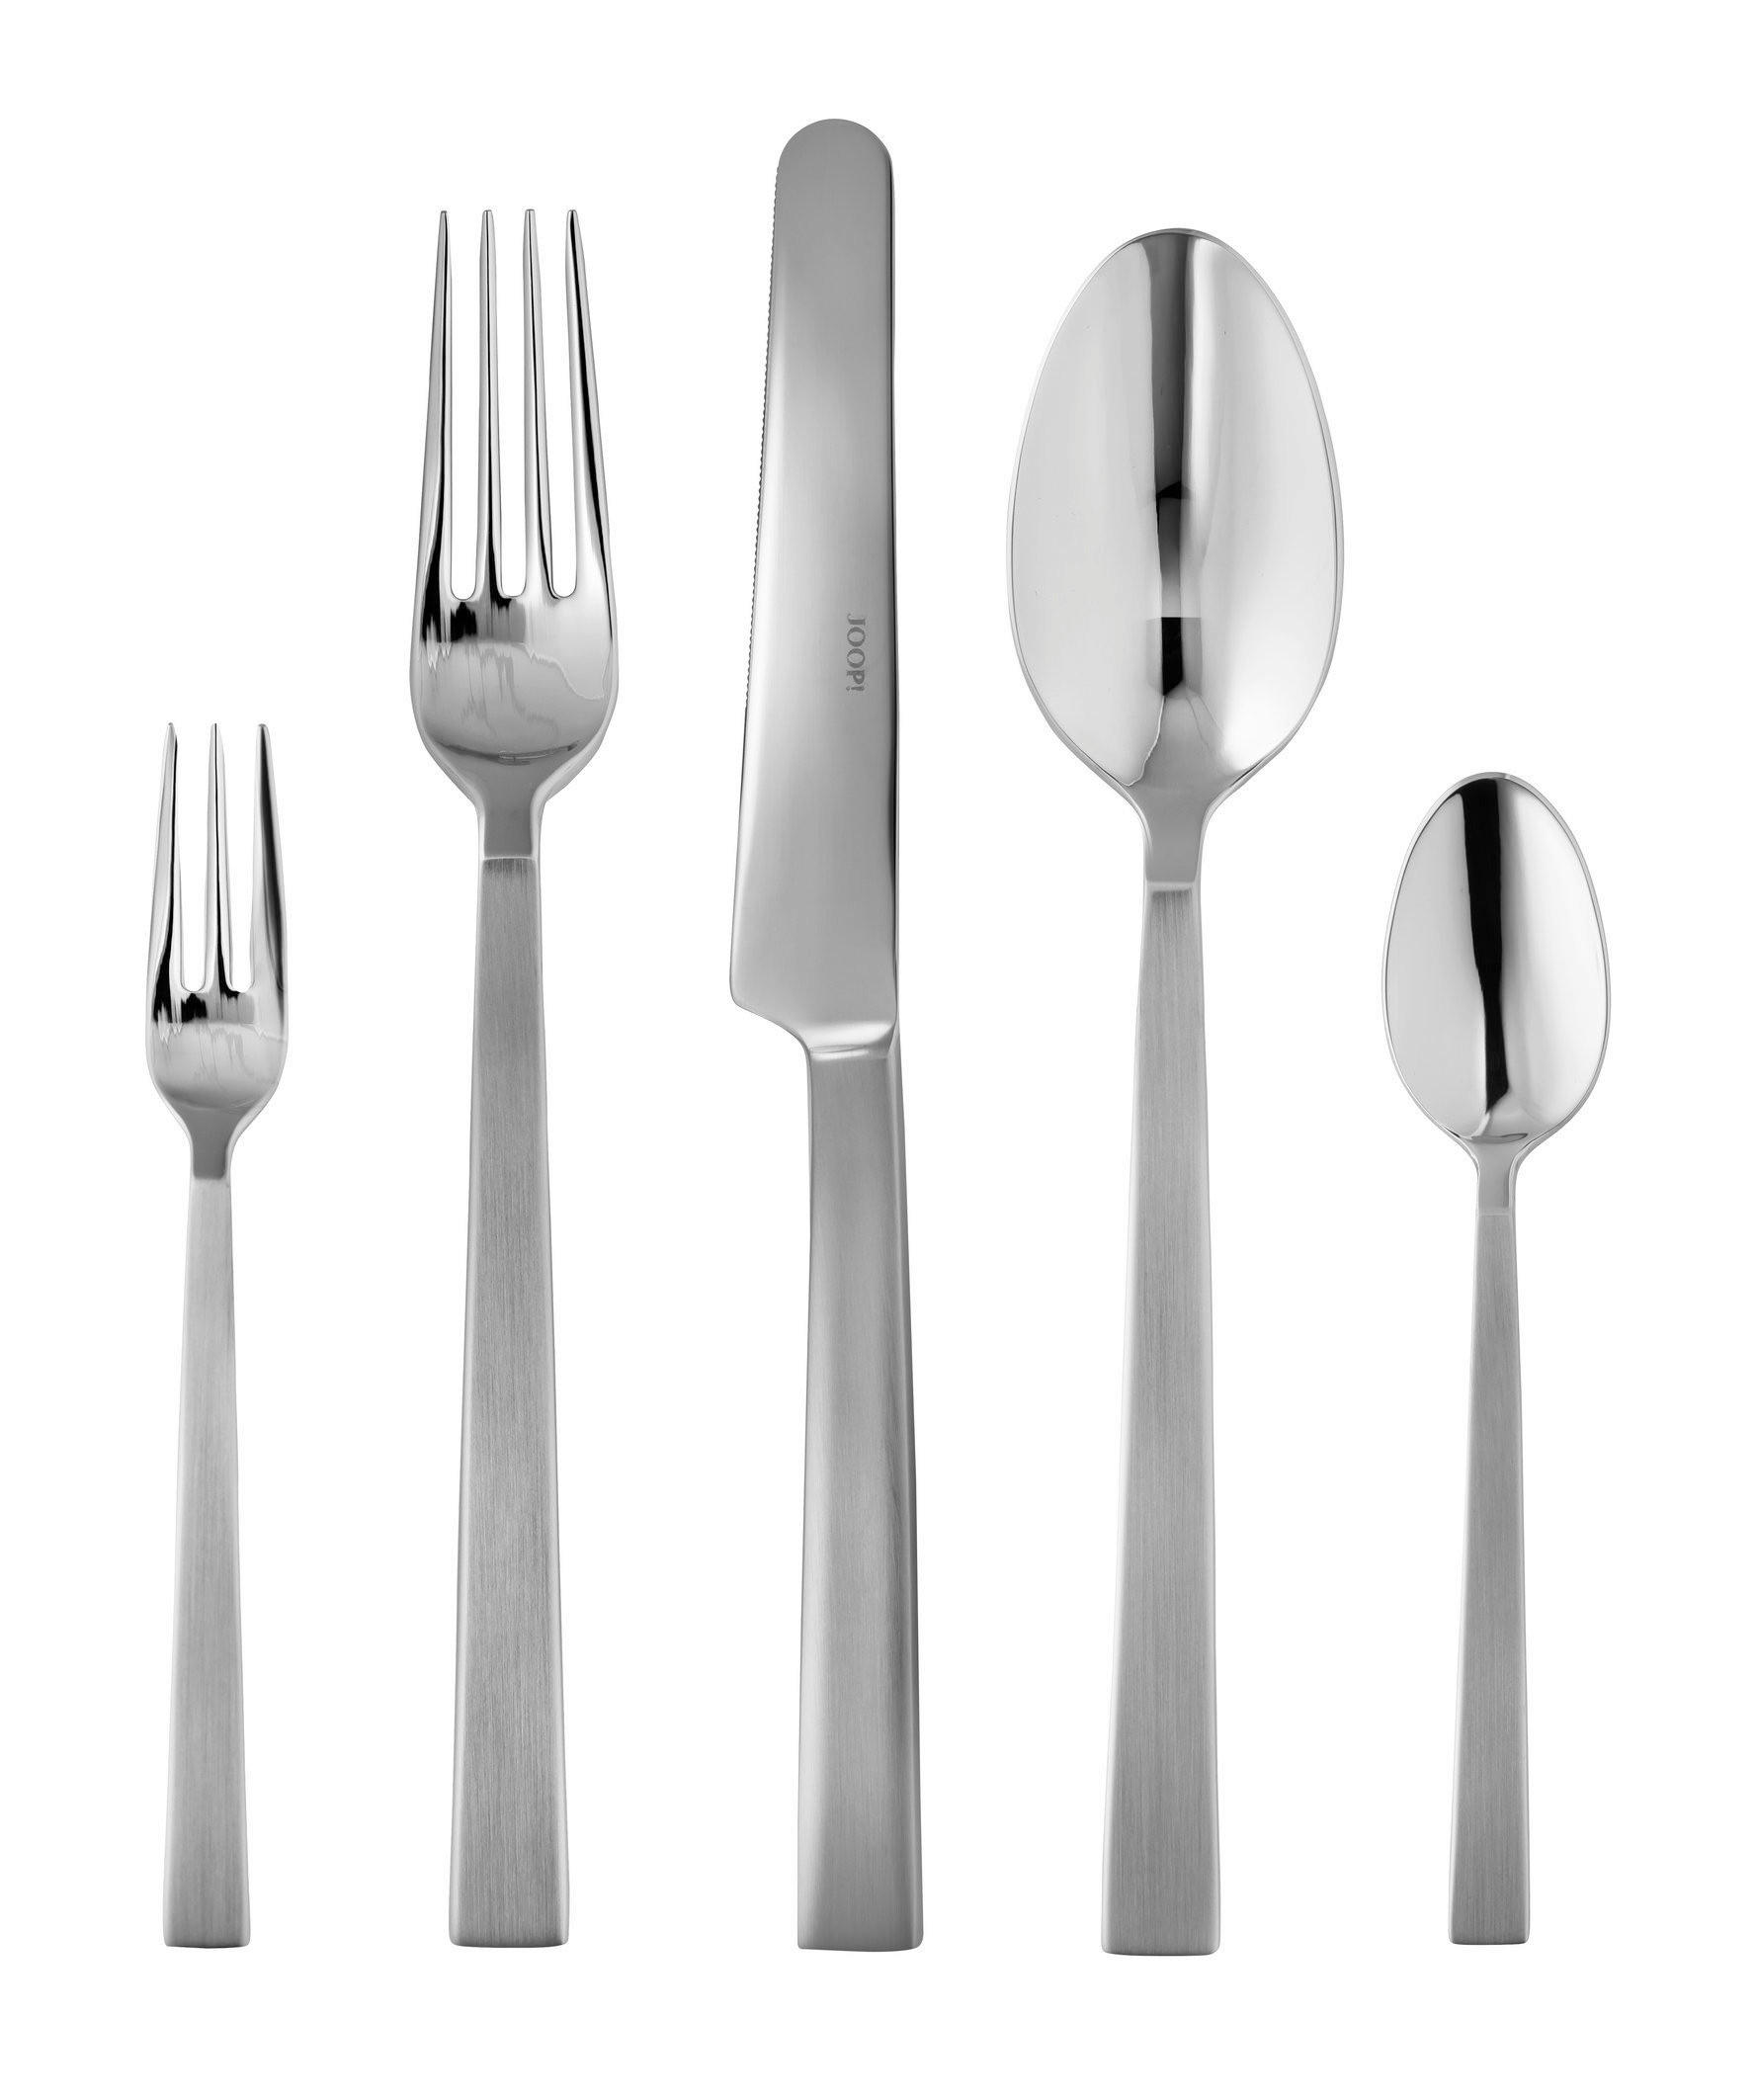 BESTECKSET Dining Glamour 30-teilig Edelstahl  - Silberfarben, Design, Metall (47,1/34,6/4,5cm) - Joop!